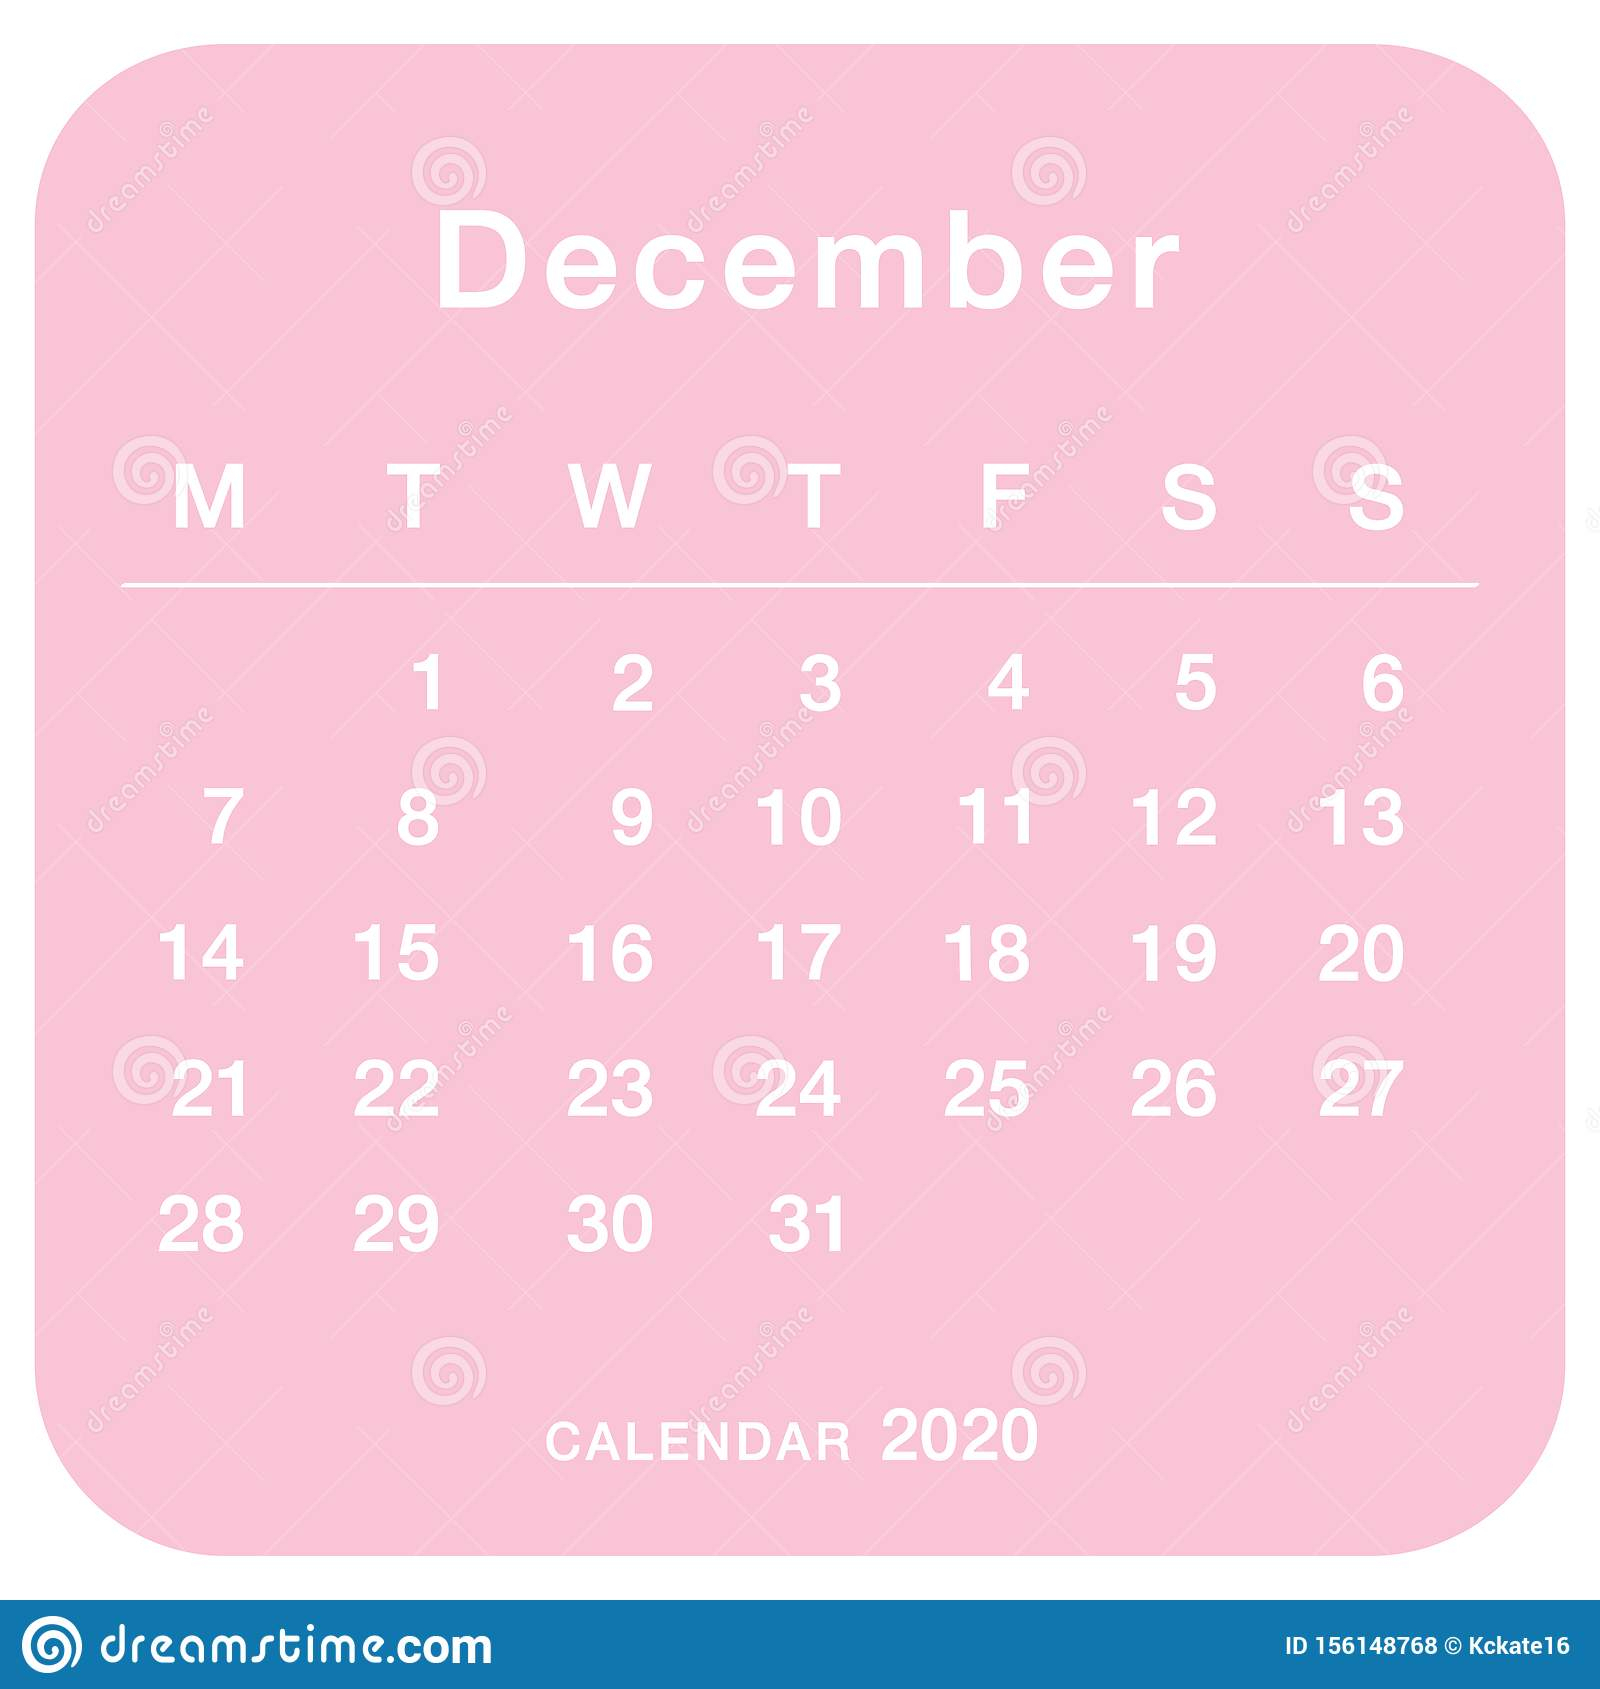 December 2020 Planning Calendar . Simple December 2020